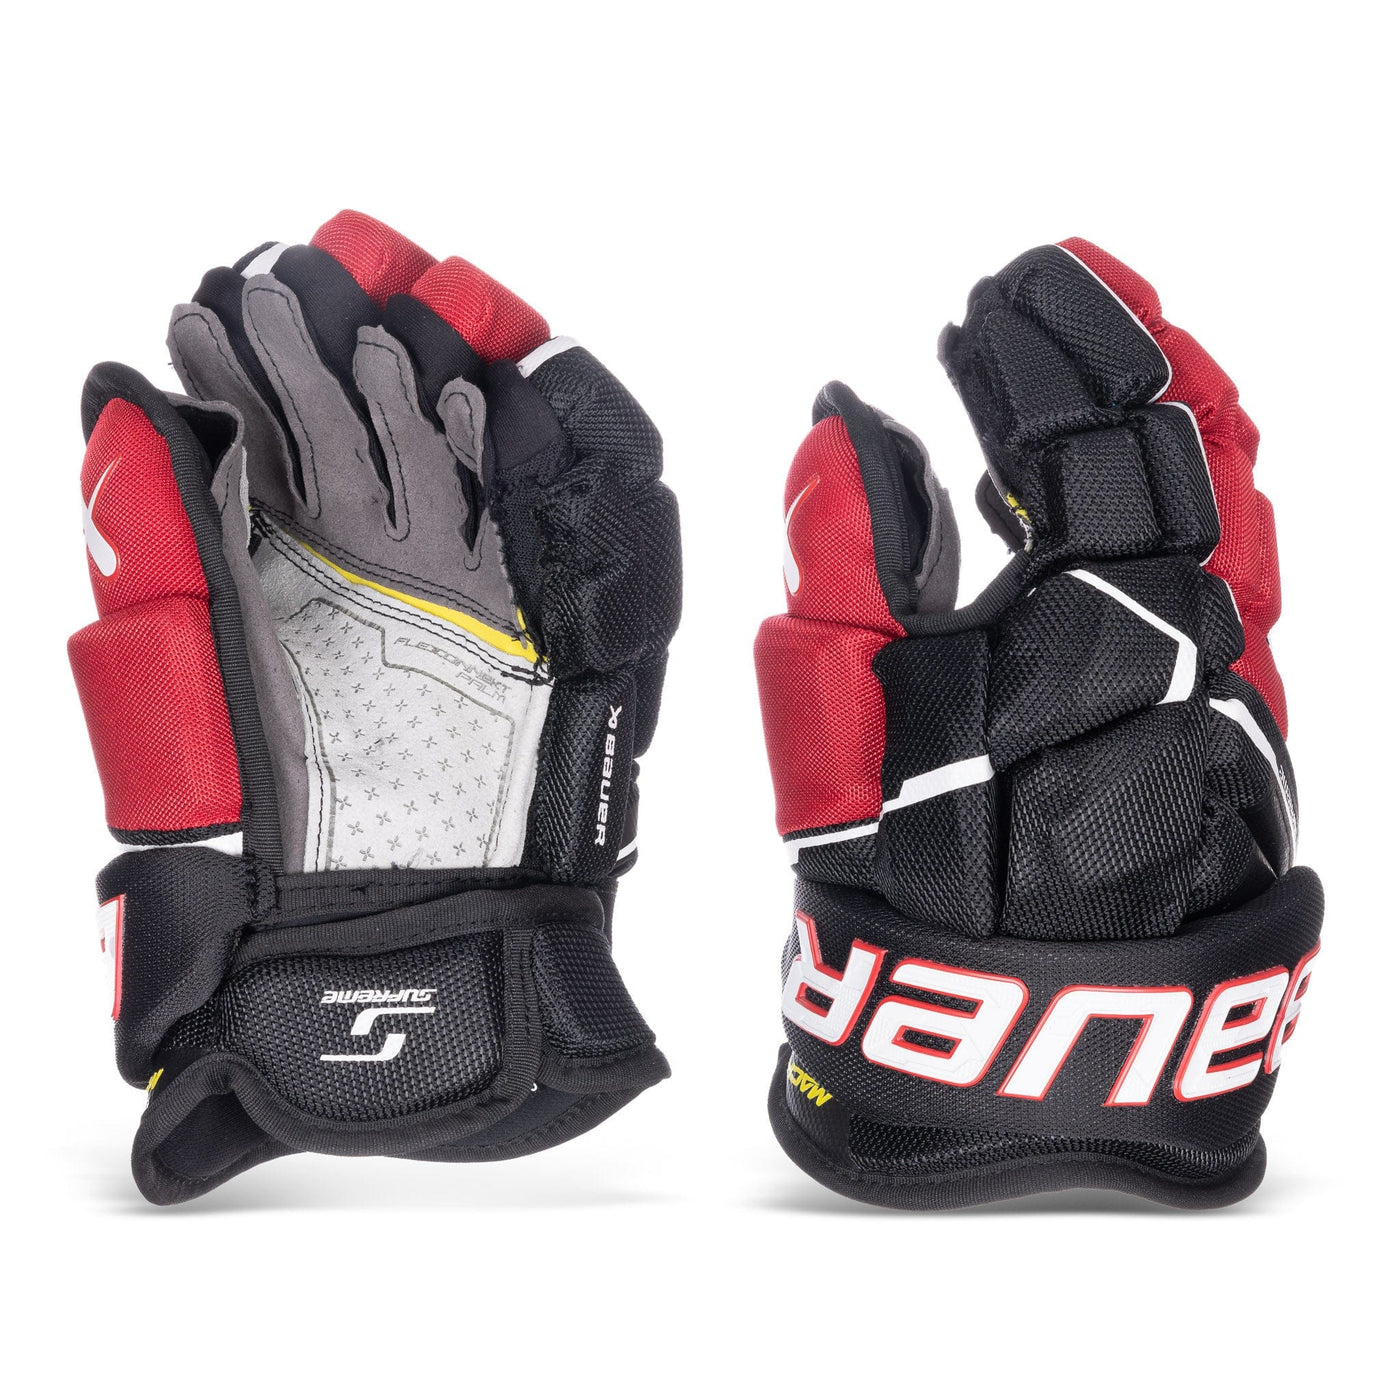 Bauer Supreme Mach Junior Hockey Gloves - The Hockey Shop Source For Sports